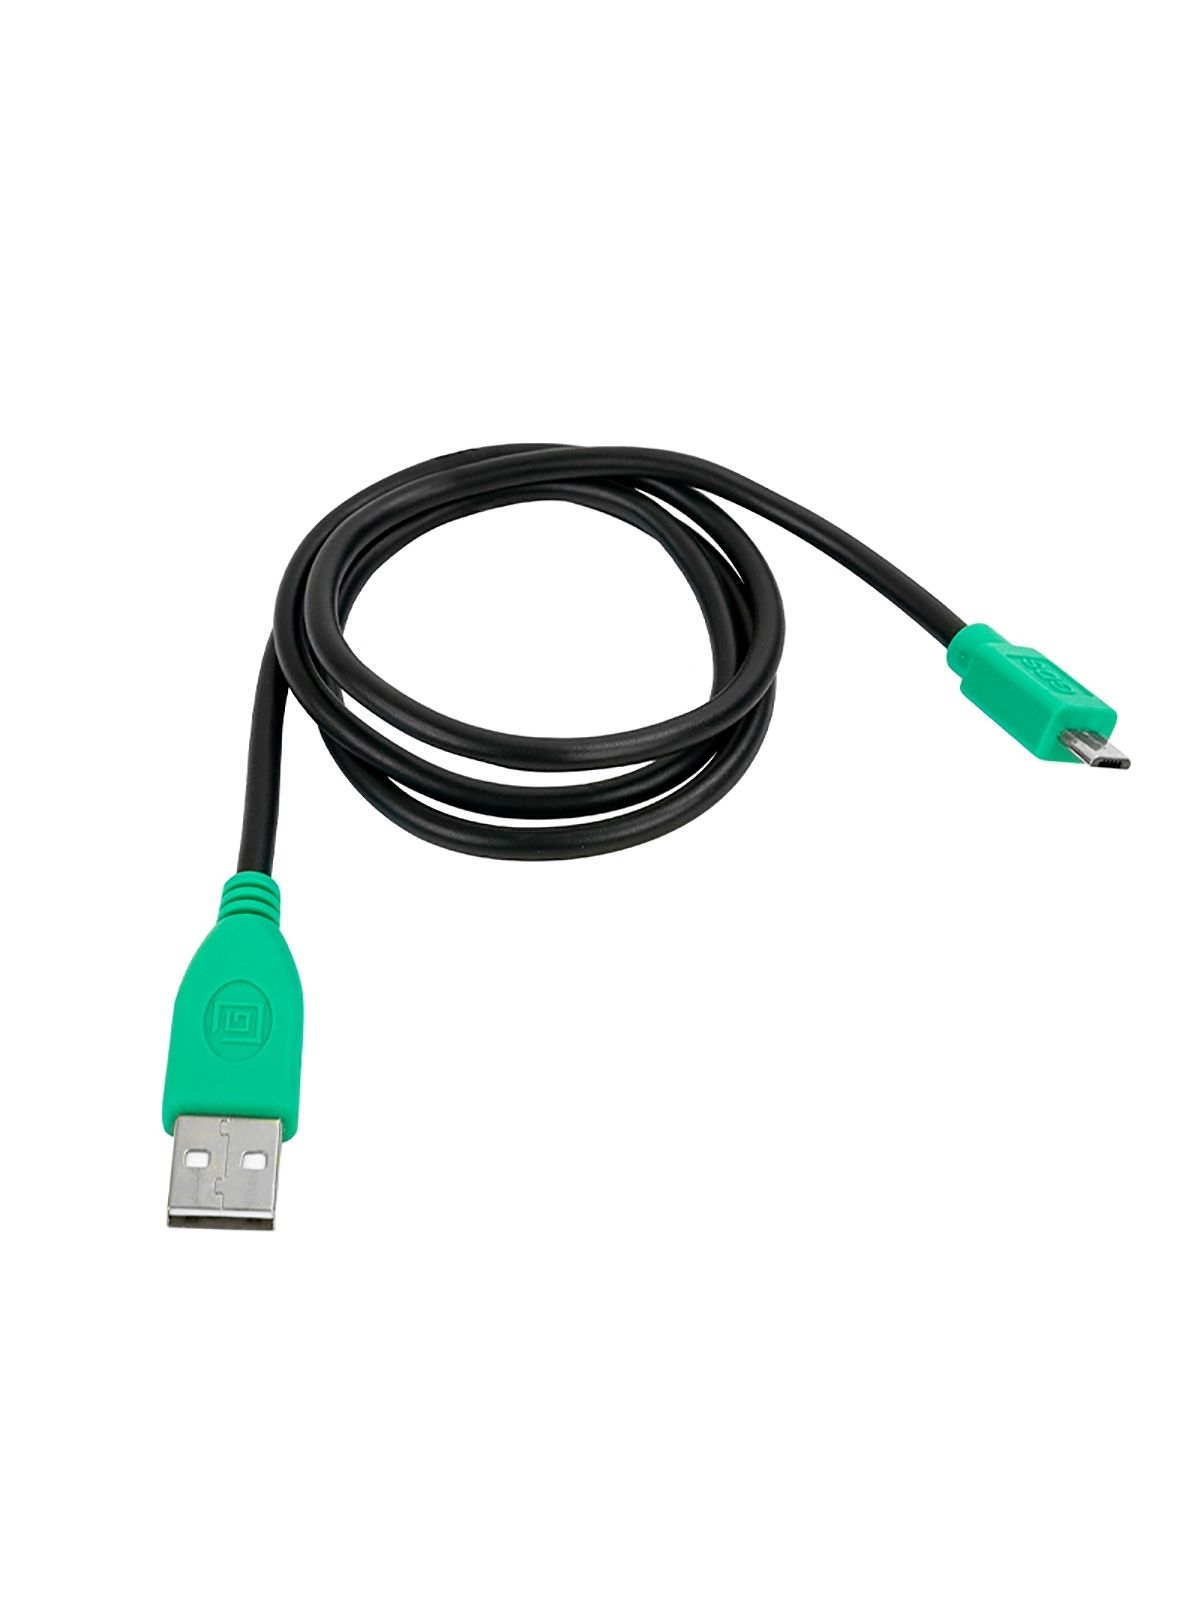 RAM Mounts GDS USB-Kabel - USB-A / microUSB, ca. 75 cm lang